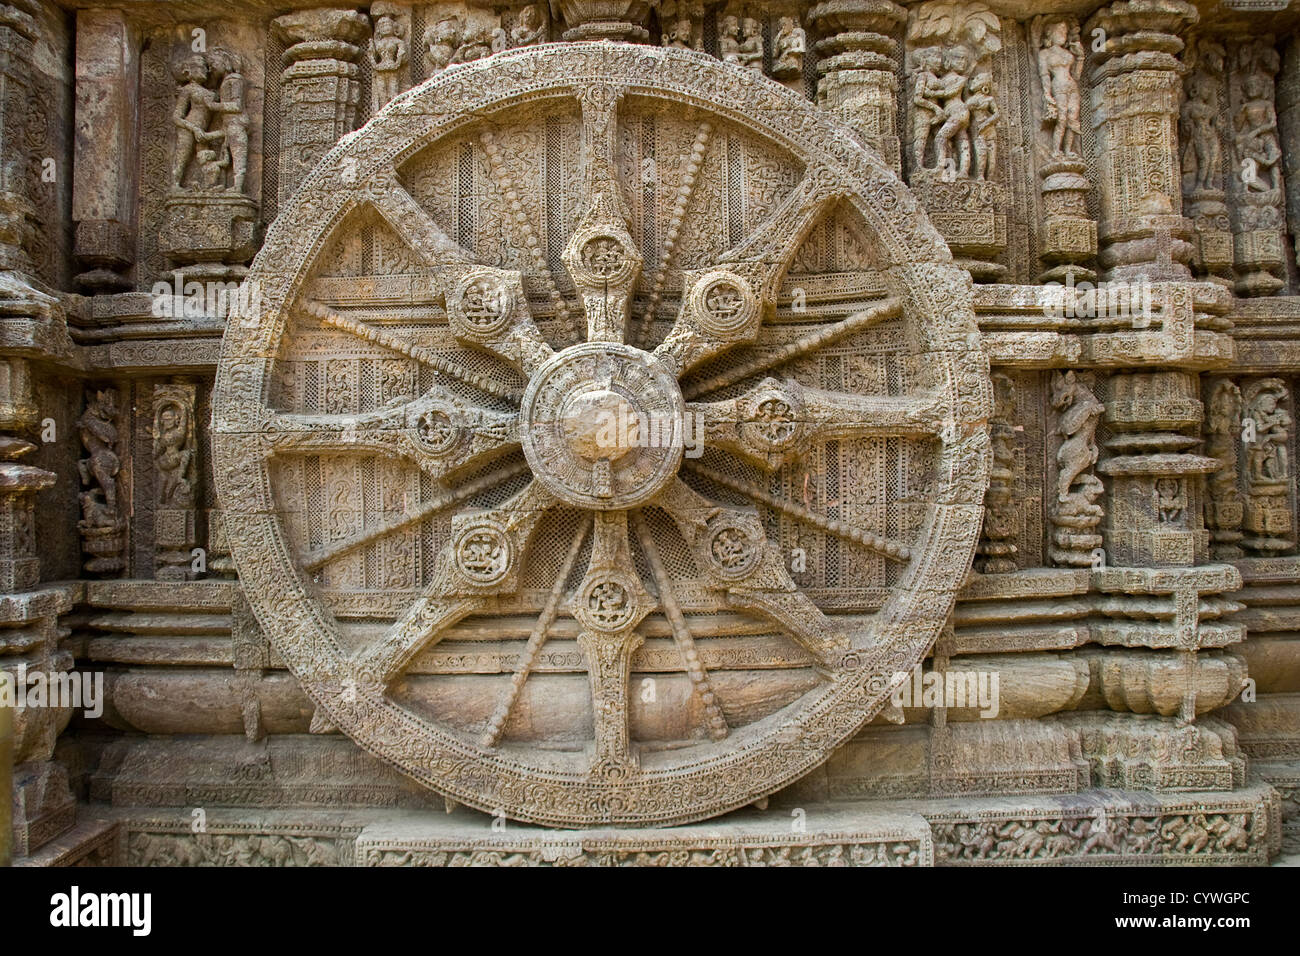 Detail s of rim, spokes and axle on chariot stone wheel at Sun Temple, Konark, Orissa, India, Asia Stock Photo